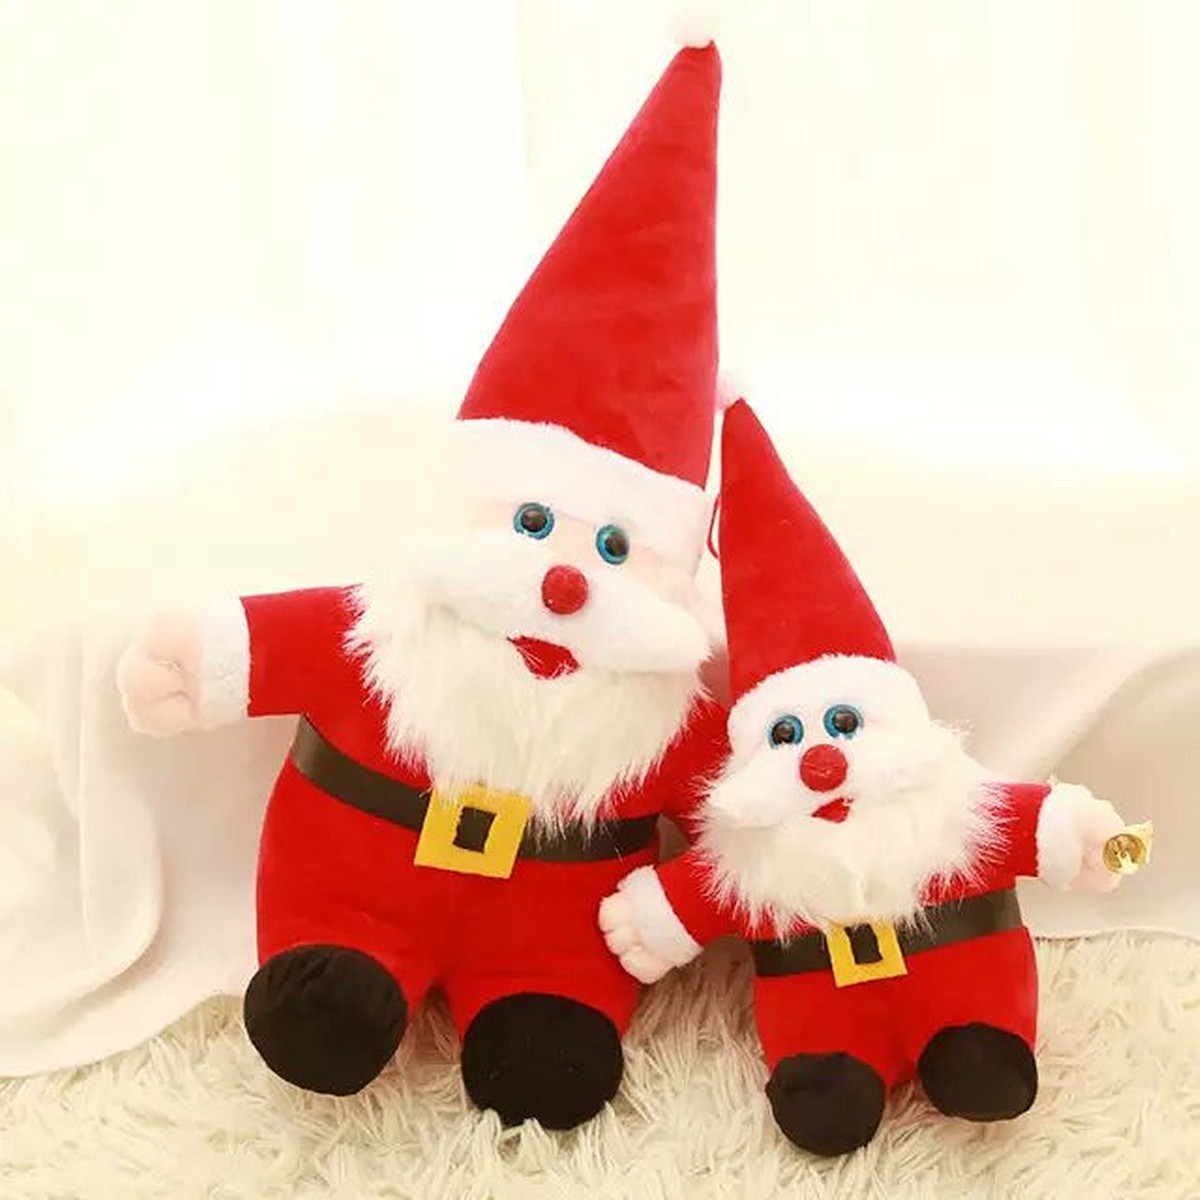 Christmas-Santa-Claus-Doll-Gift-Present-Xmas-Tree-Hanging-Ornament-Home-Decor-1087849-2